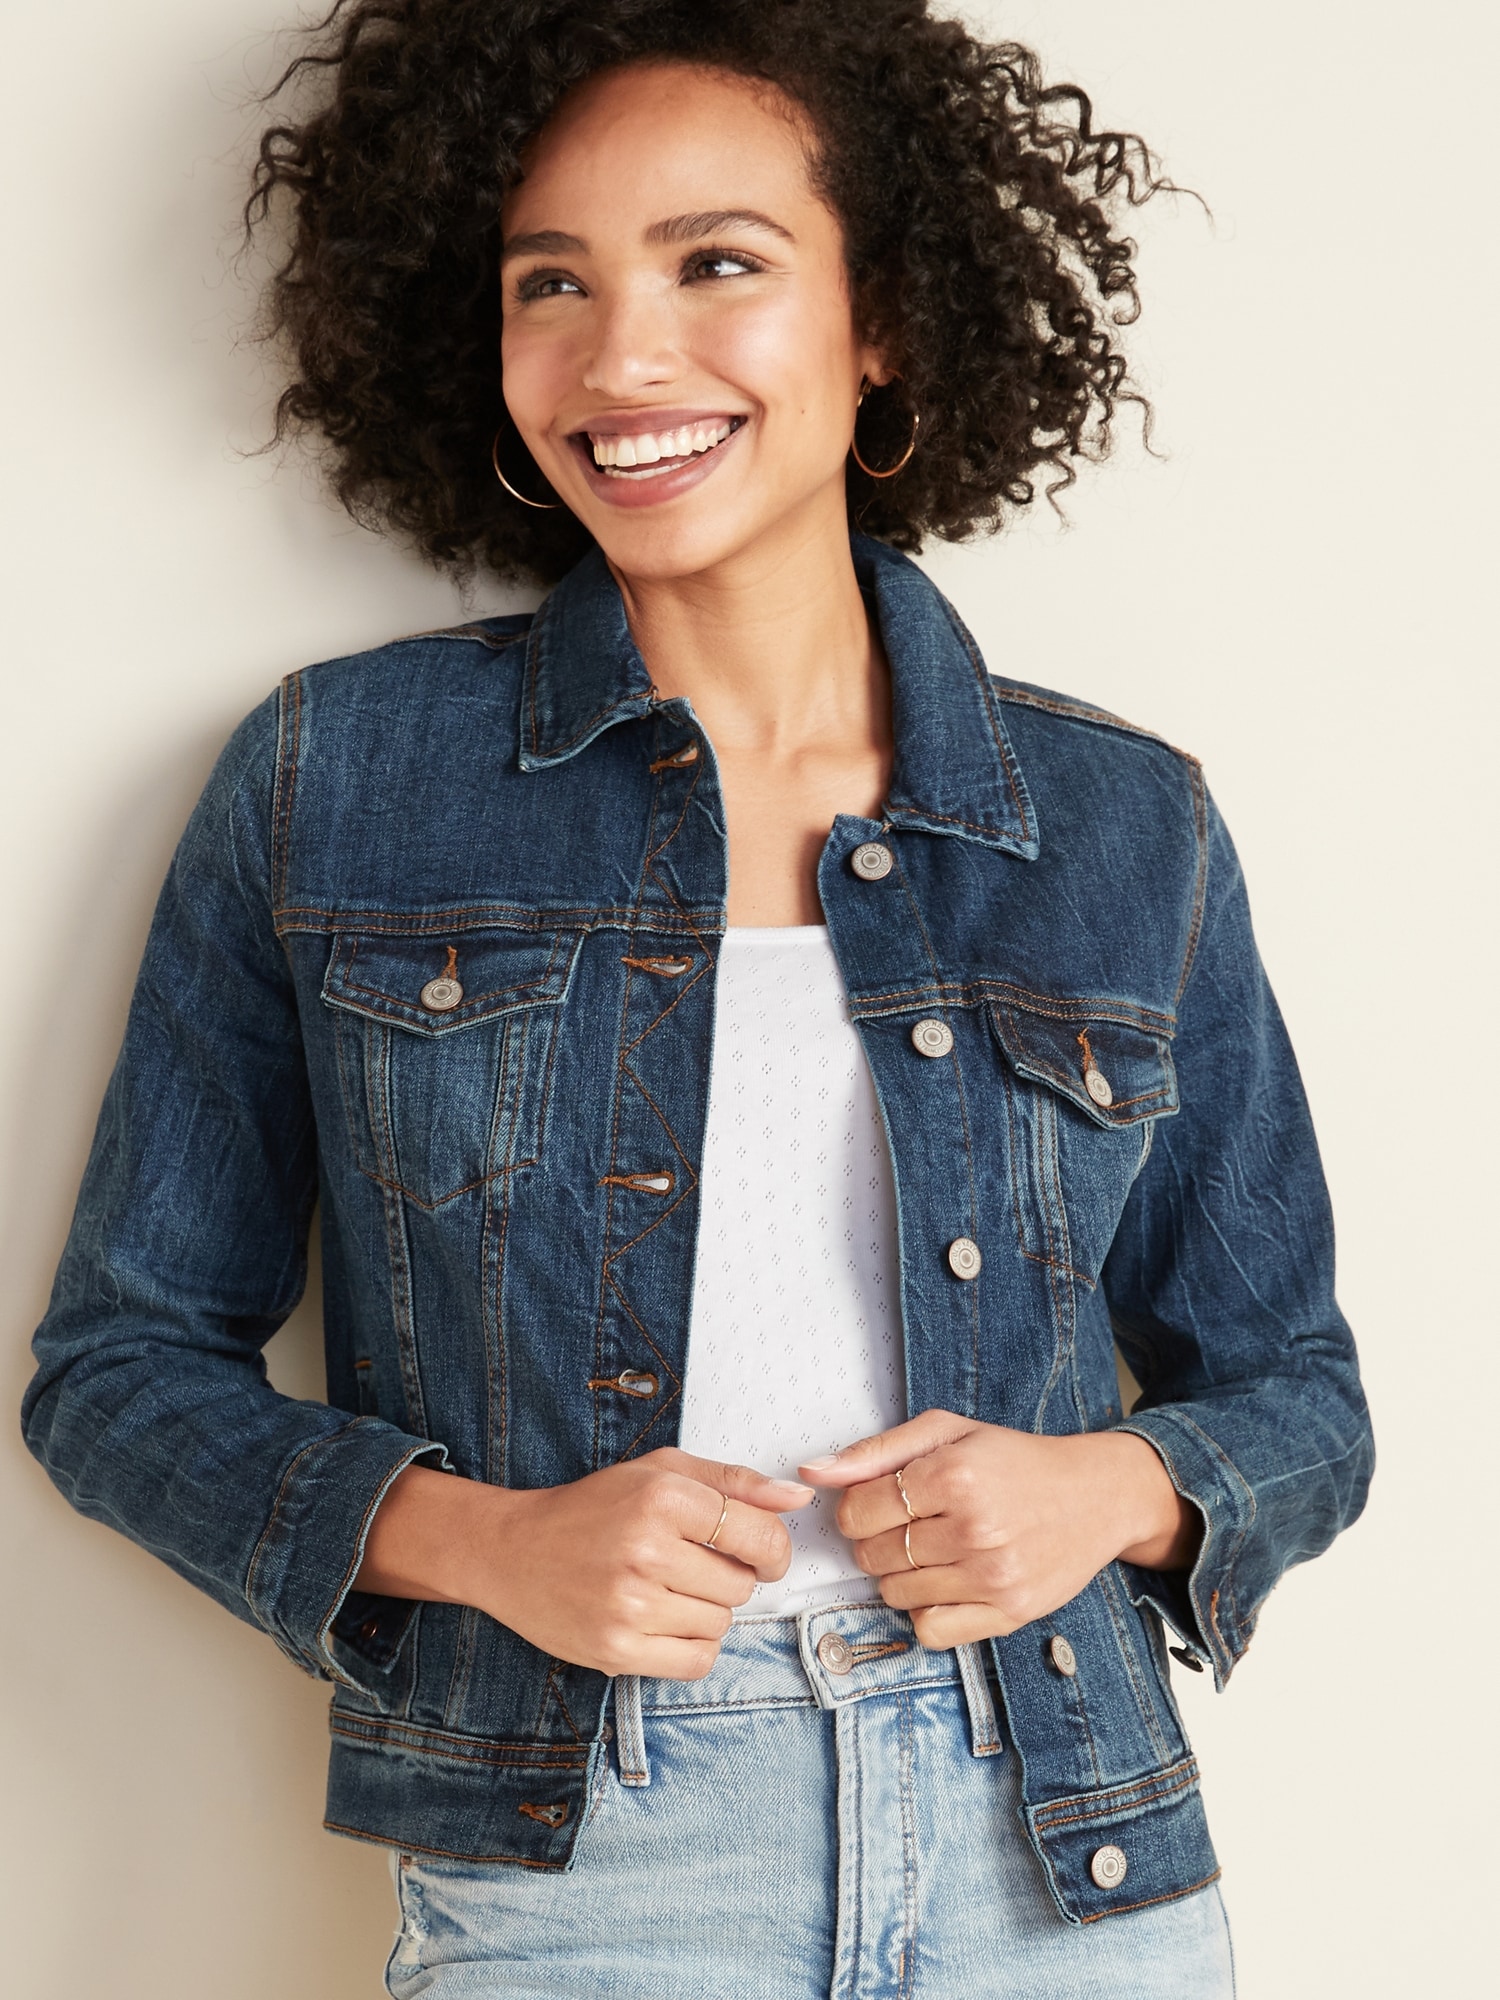 Jeans Jacket For Women - malaynau